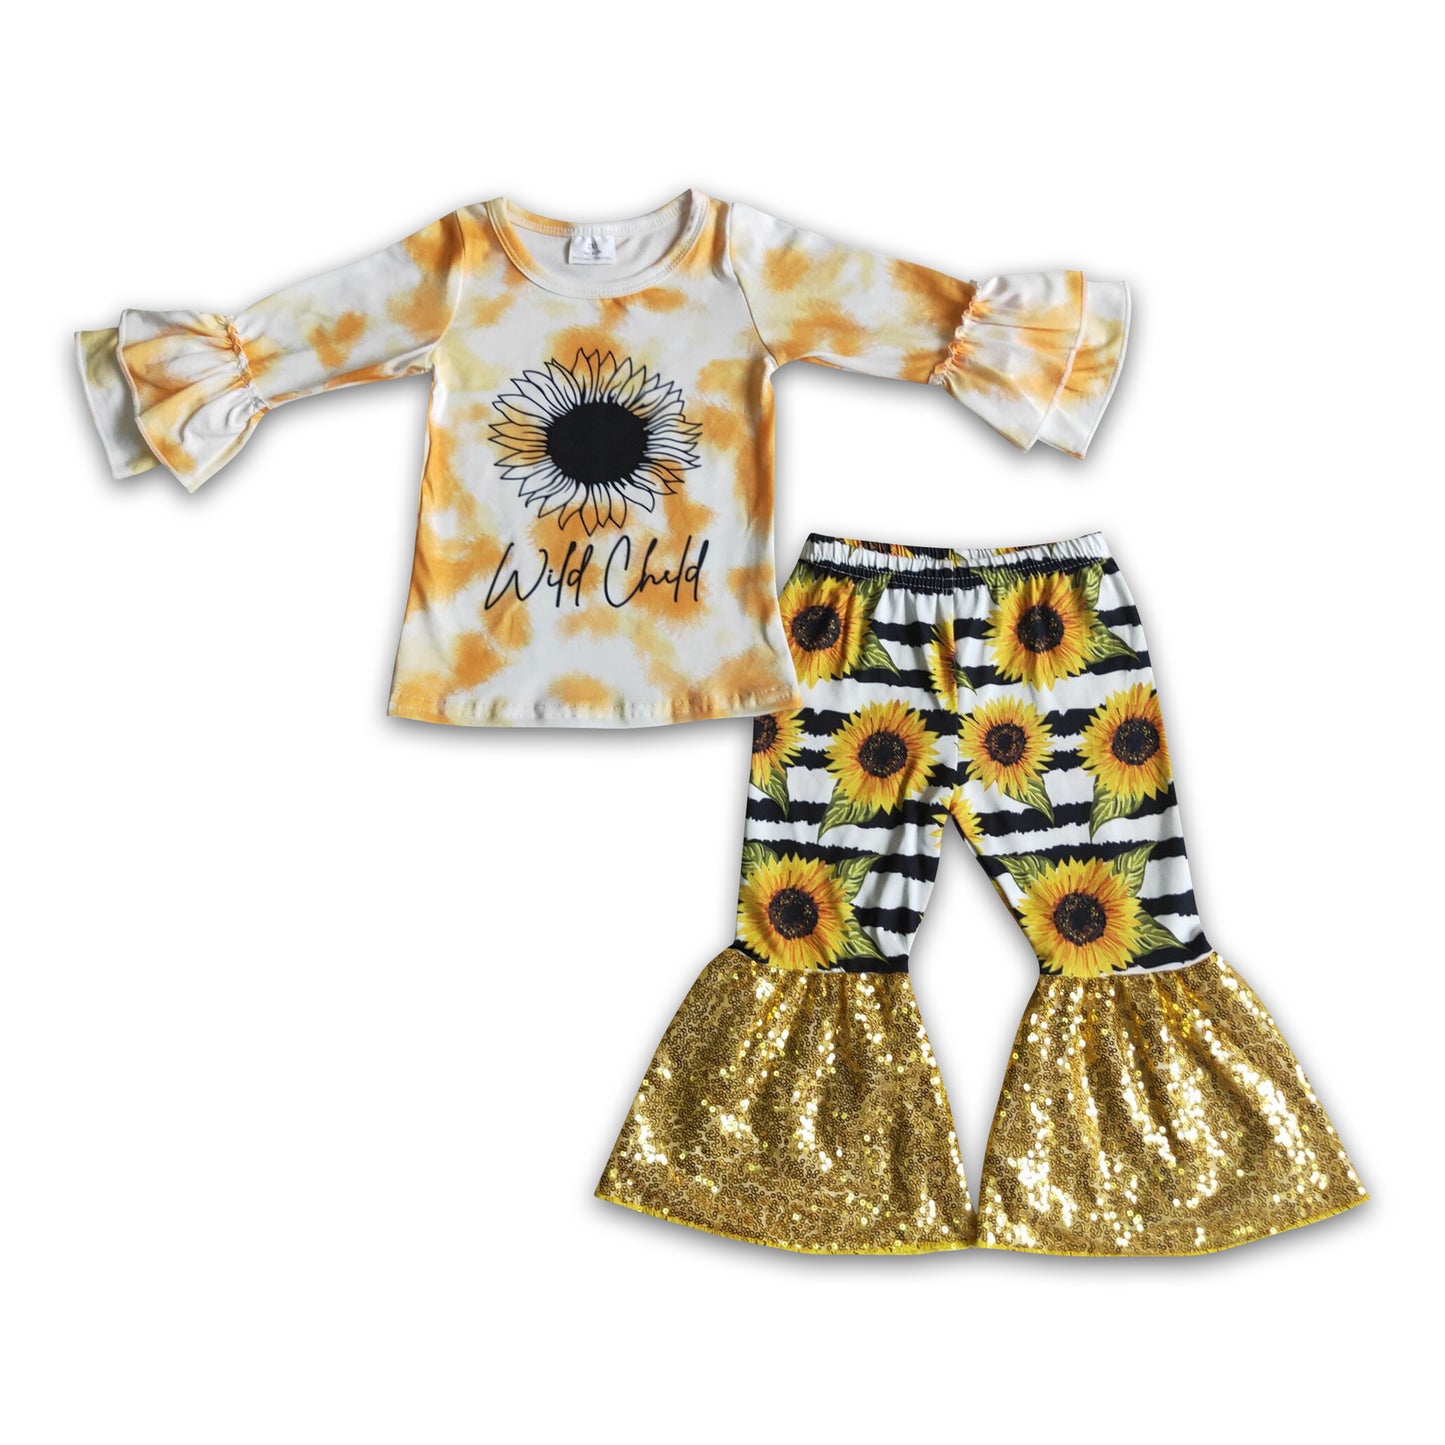 Wild child sunflower sequin bells toddler girls clothing set